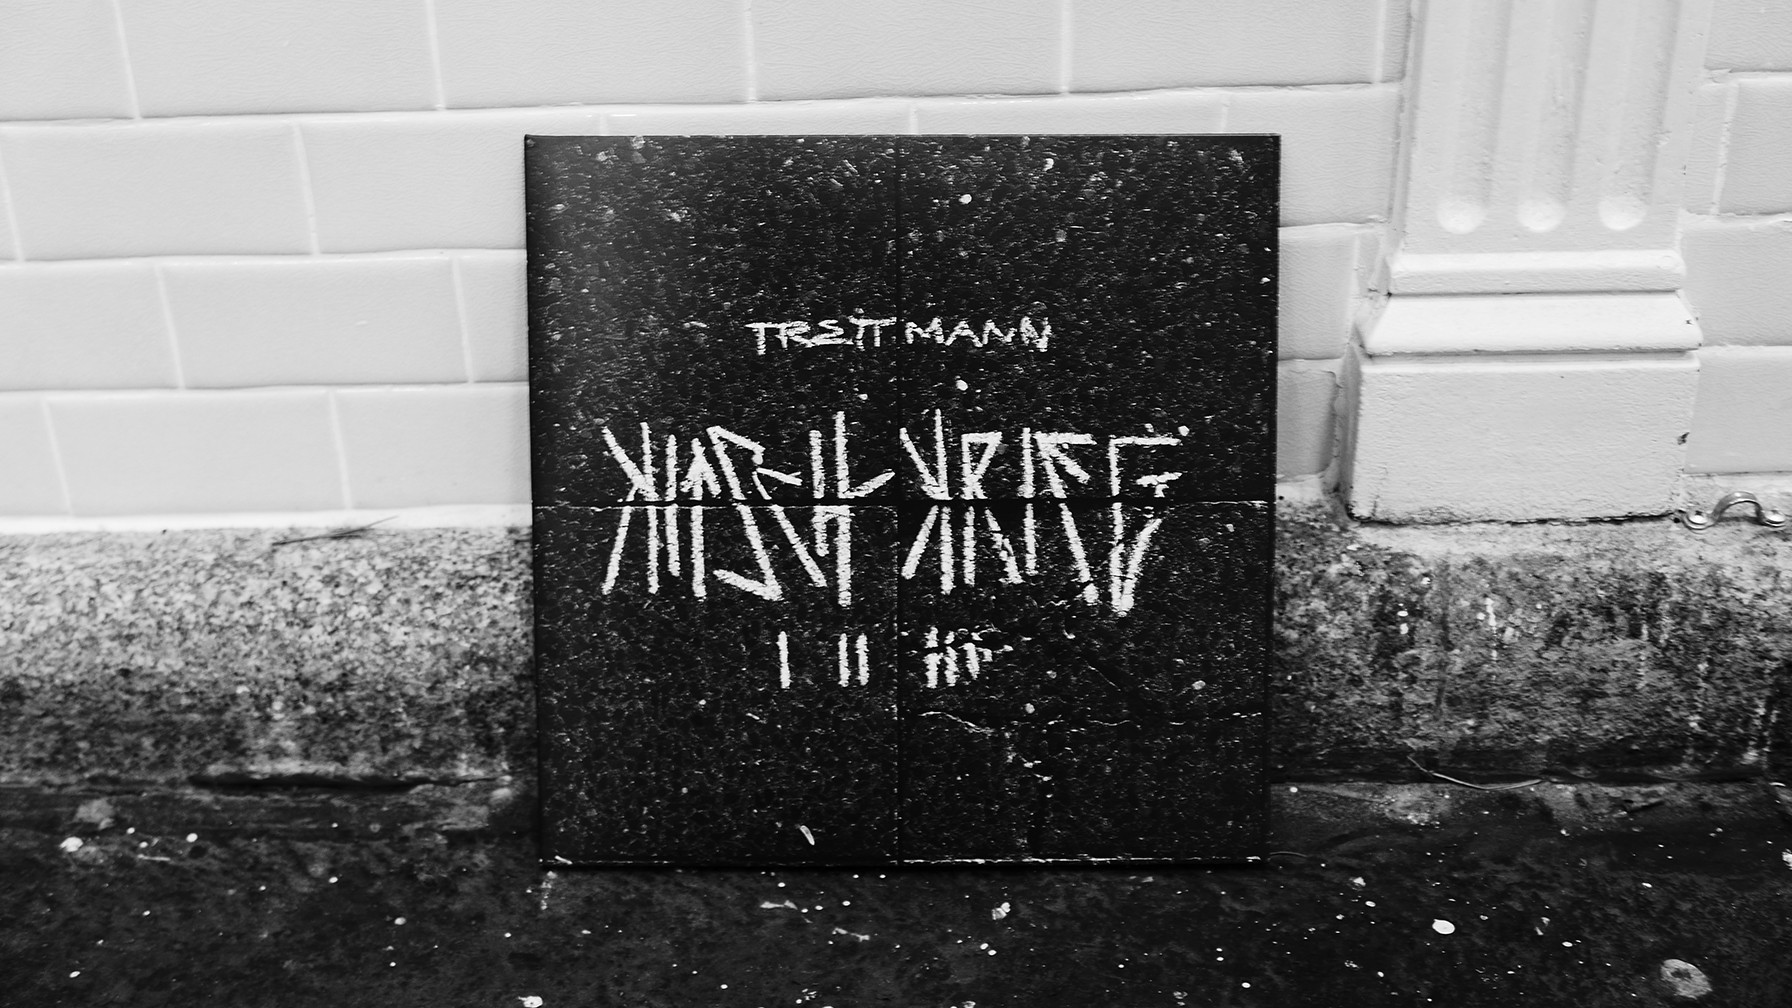 Trettmann Diy Vinyl
 TRETTMANN x KITSCHKRIEG DOPPELVINYL KITSCHKRIEG